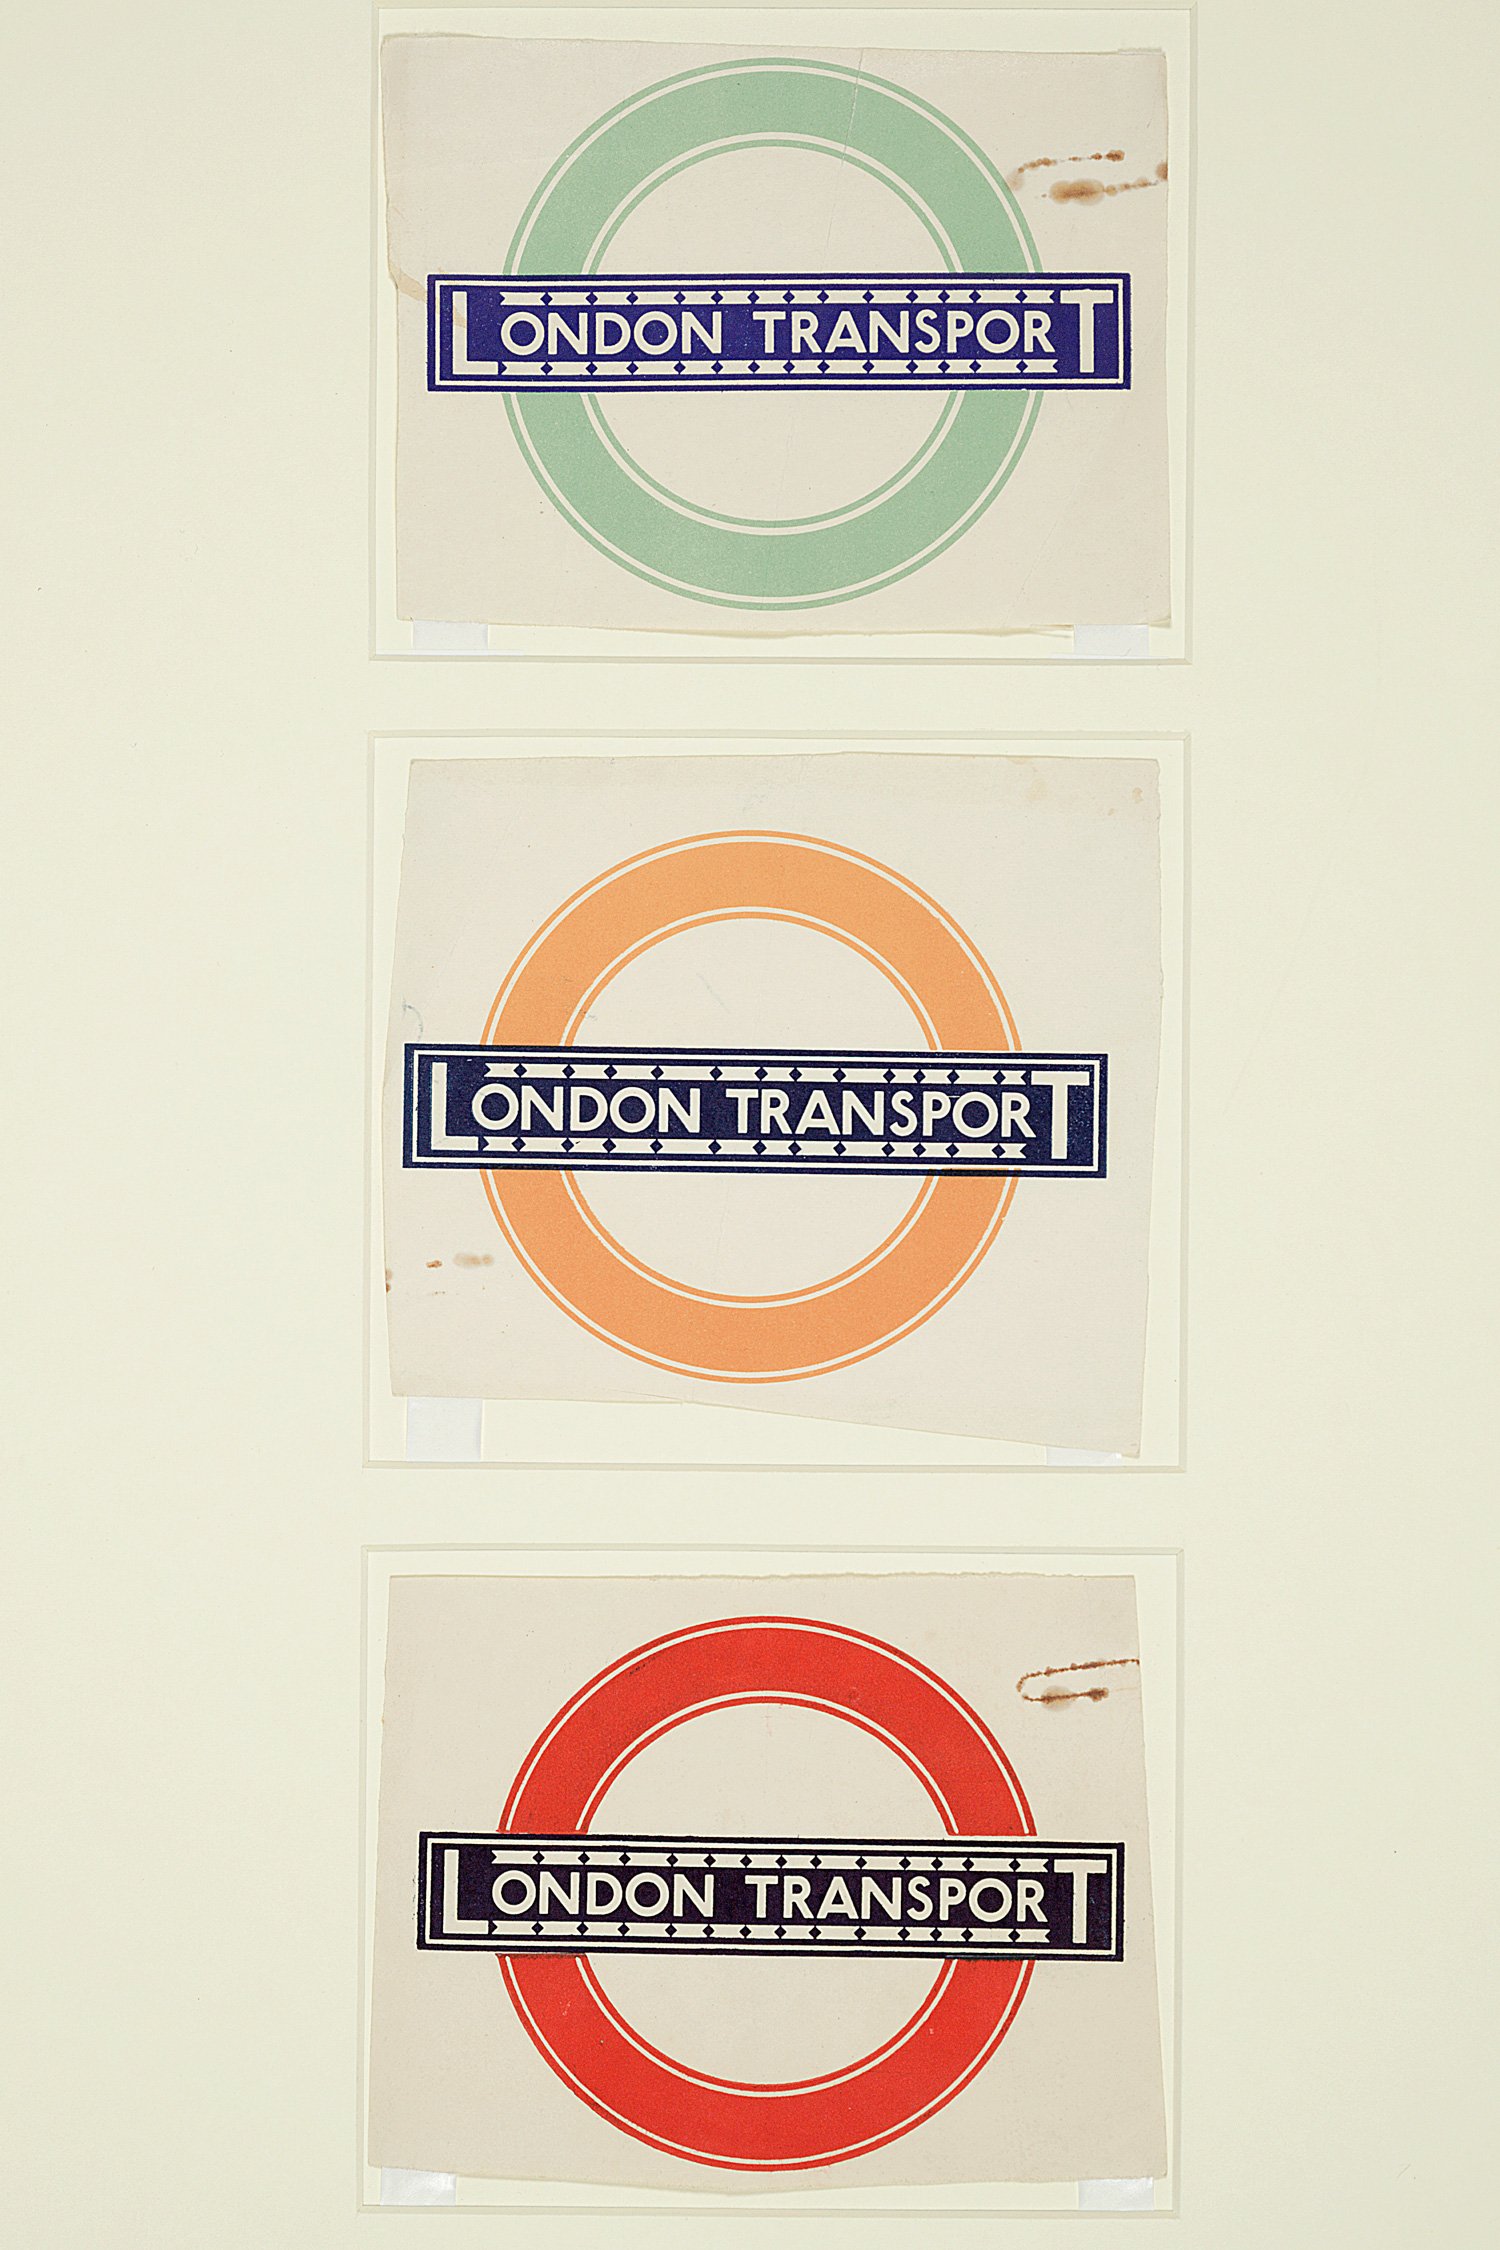 London Underground's iconic Johnston Sans typeface